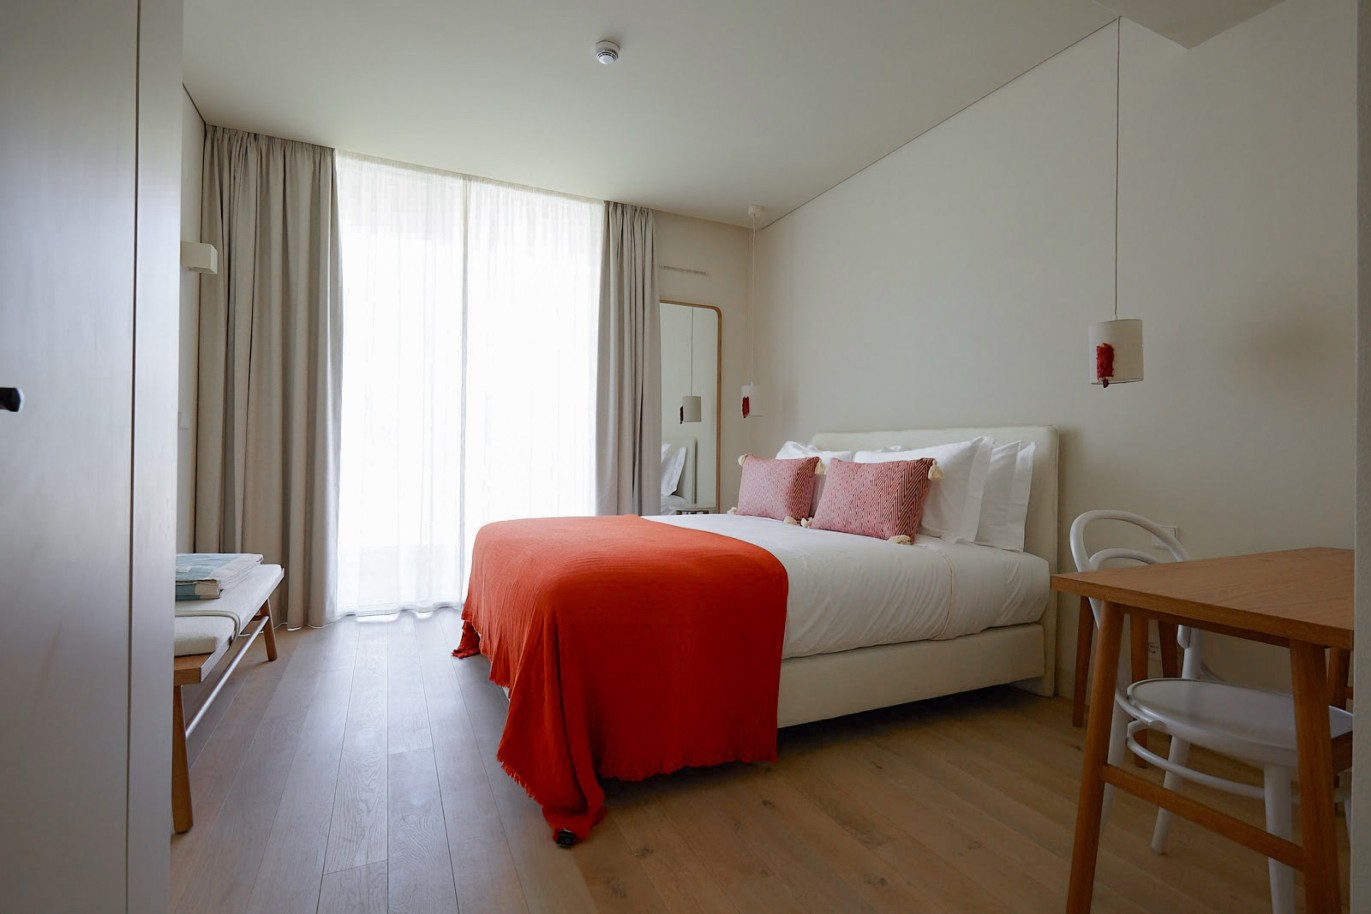 2 bedroom apartment in resort, for sale in Porches, Algarve_230486